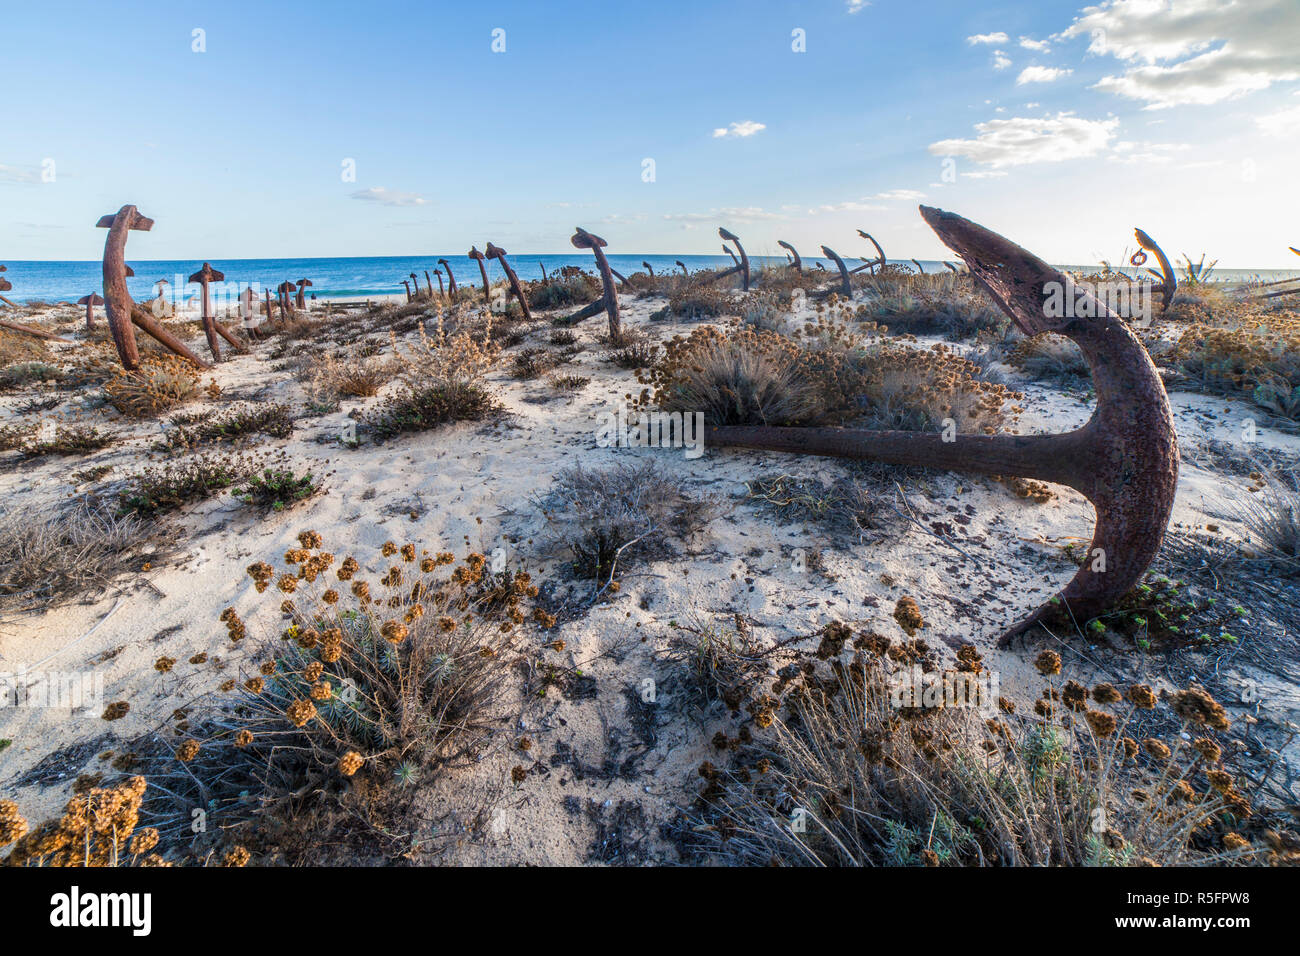 Cemetery of Anchors. Memorial monument to dead fishermen of tuna industry in Portugal. Barril beach, Santa Luzia, Algarve Stock Photo